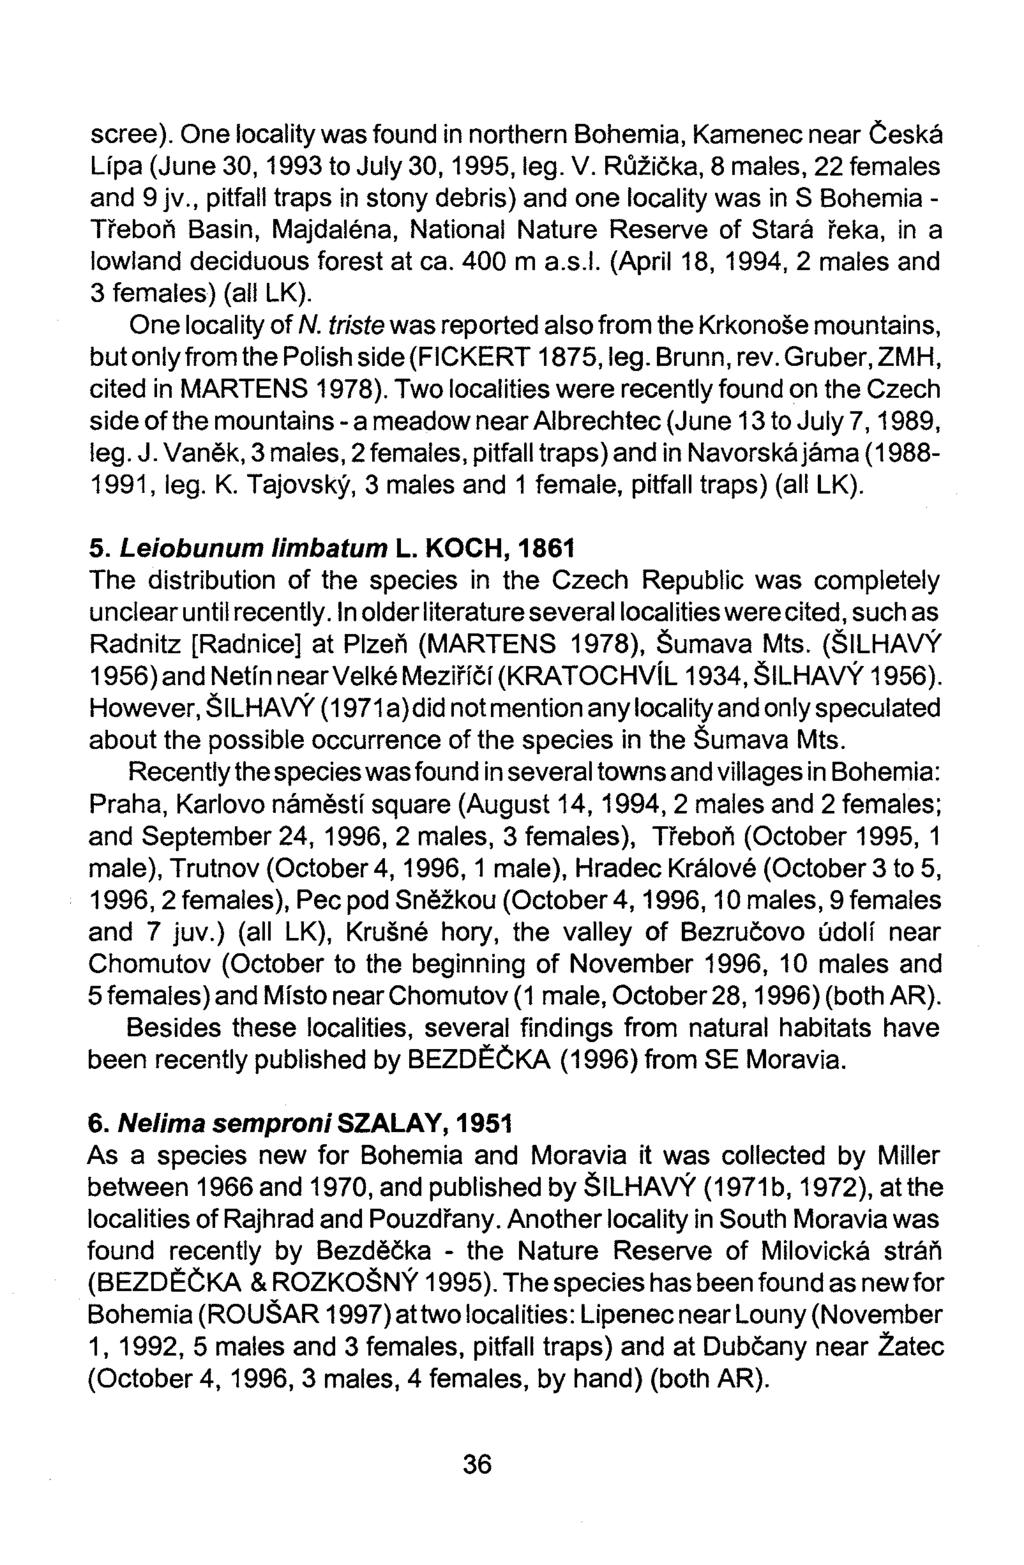 scree). One locality was found in northern Bohemia, Kamenec near Ceska Upa (June 30, 1993 to July 30, 1995, leg. V. Ruzicka, 8 males, 22 females and 9 jv.